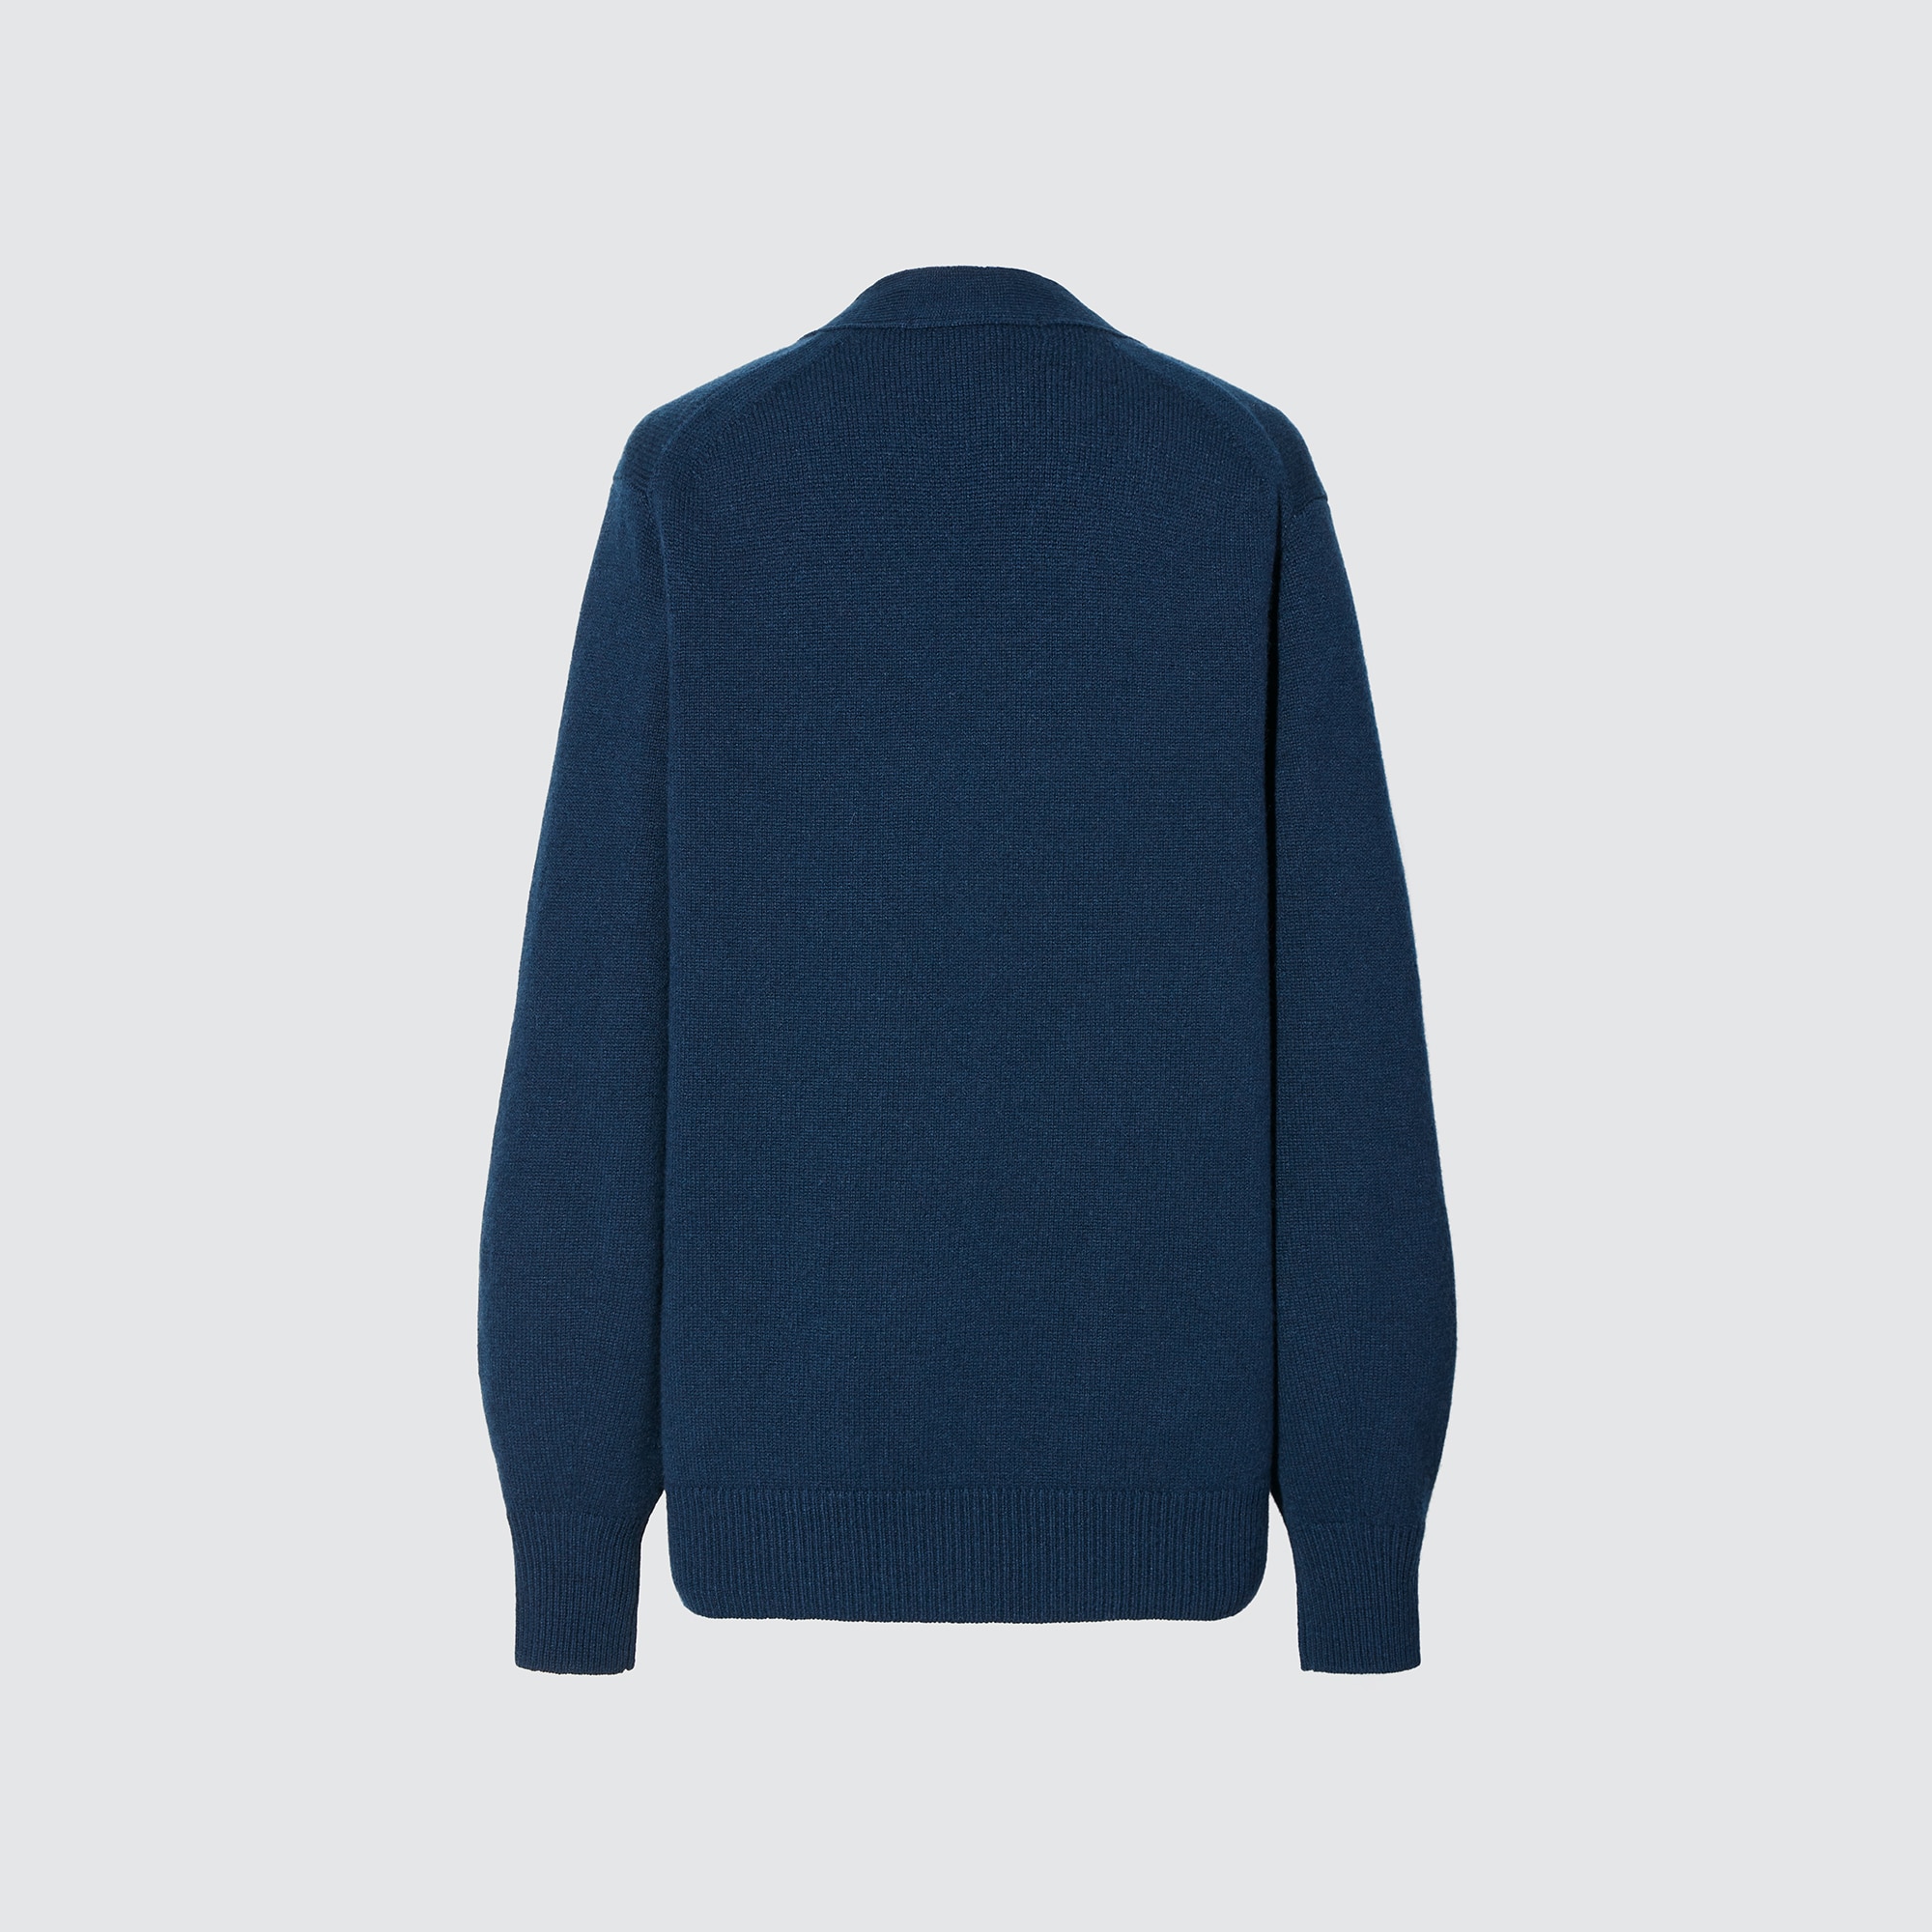 discount 95% KIDS FASHION Jumpers & Sweatshirts Casual Navy Blue 14Y Zara jumper 